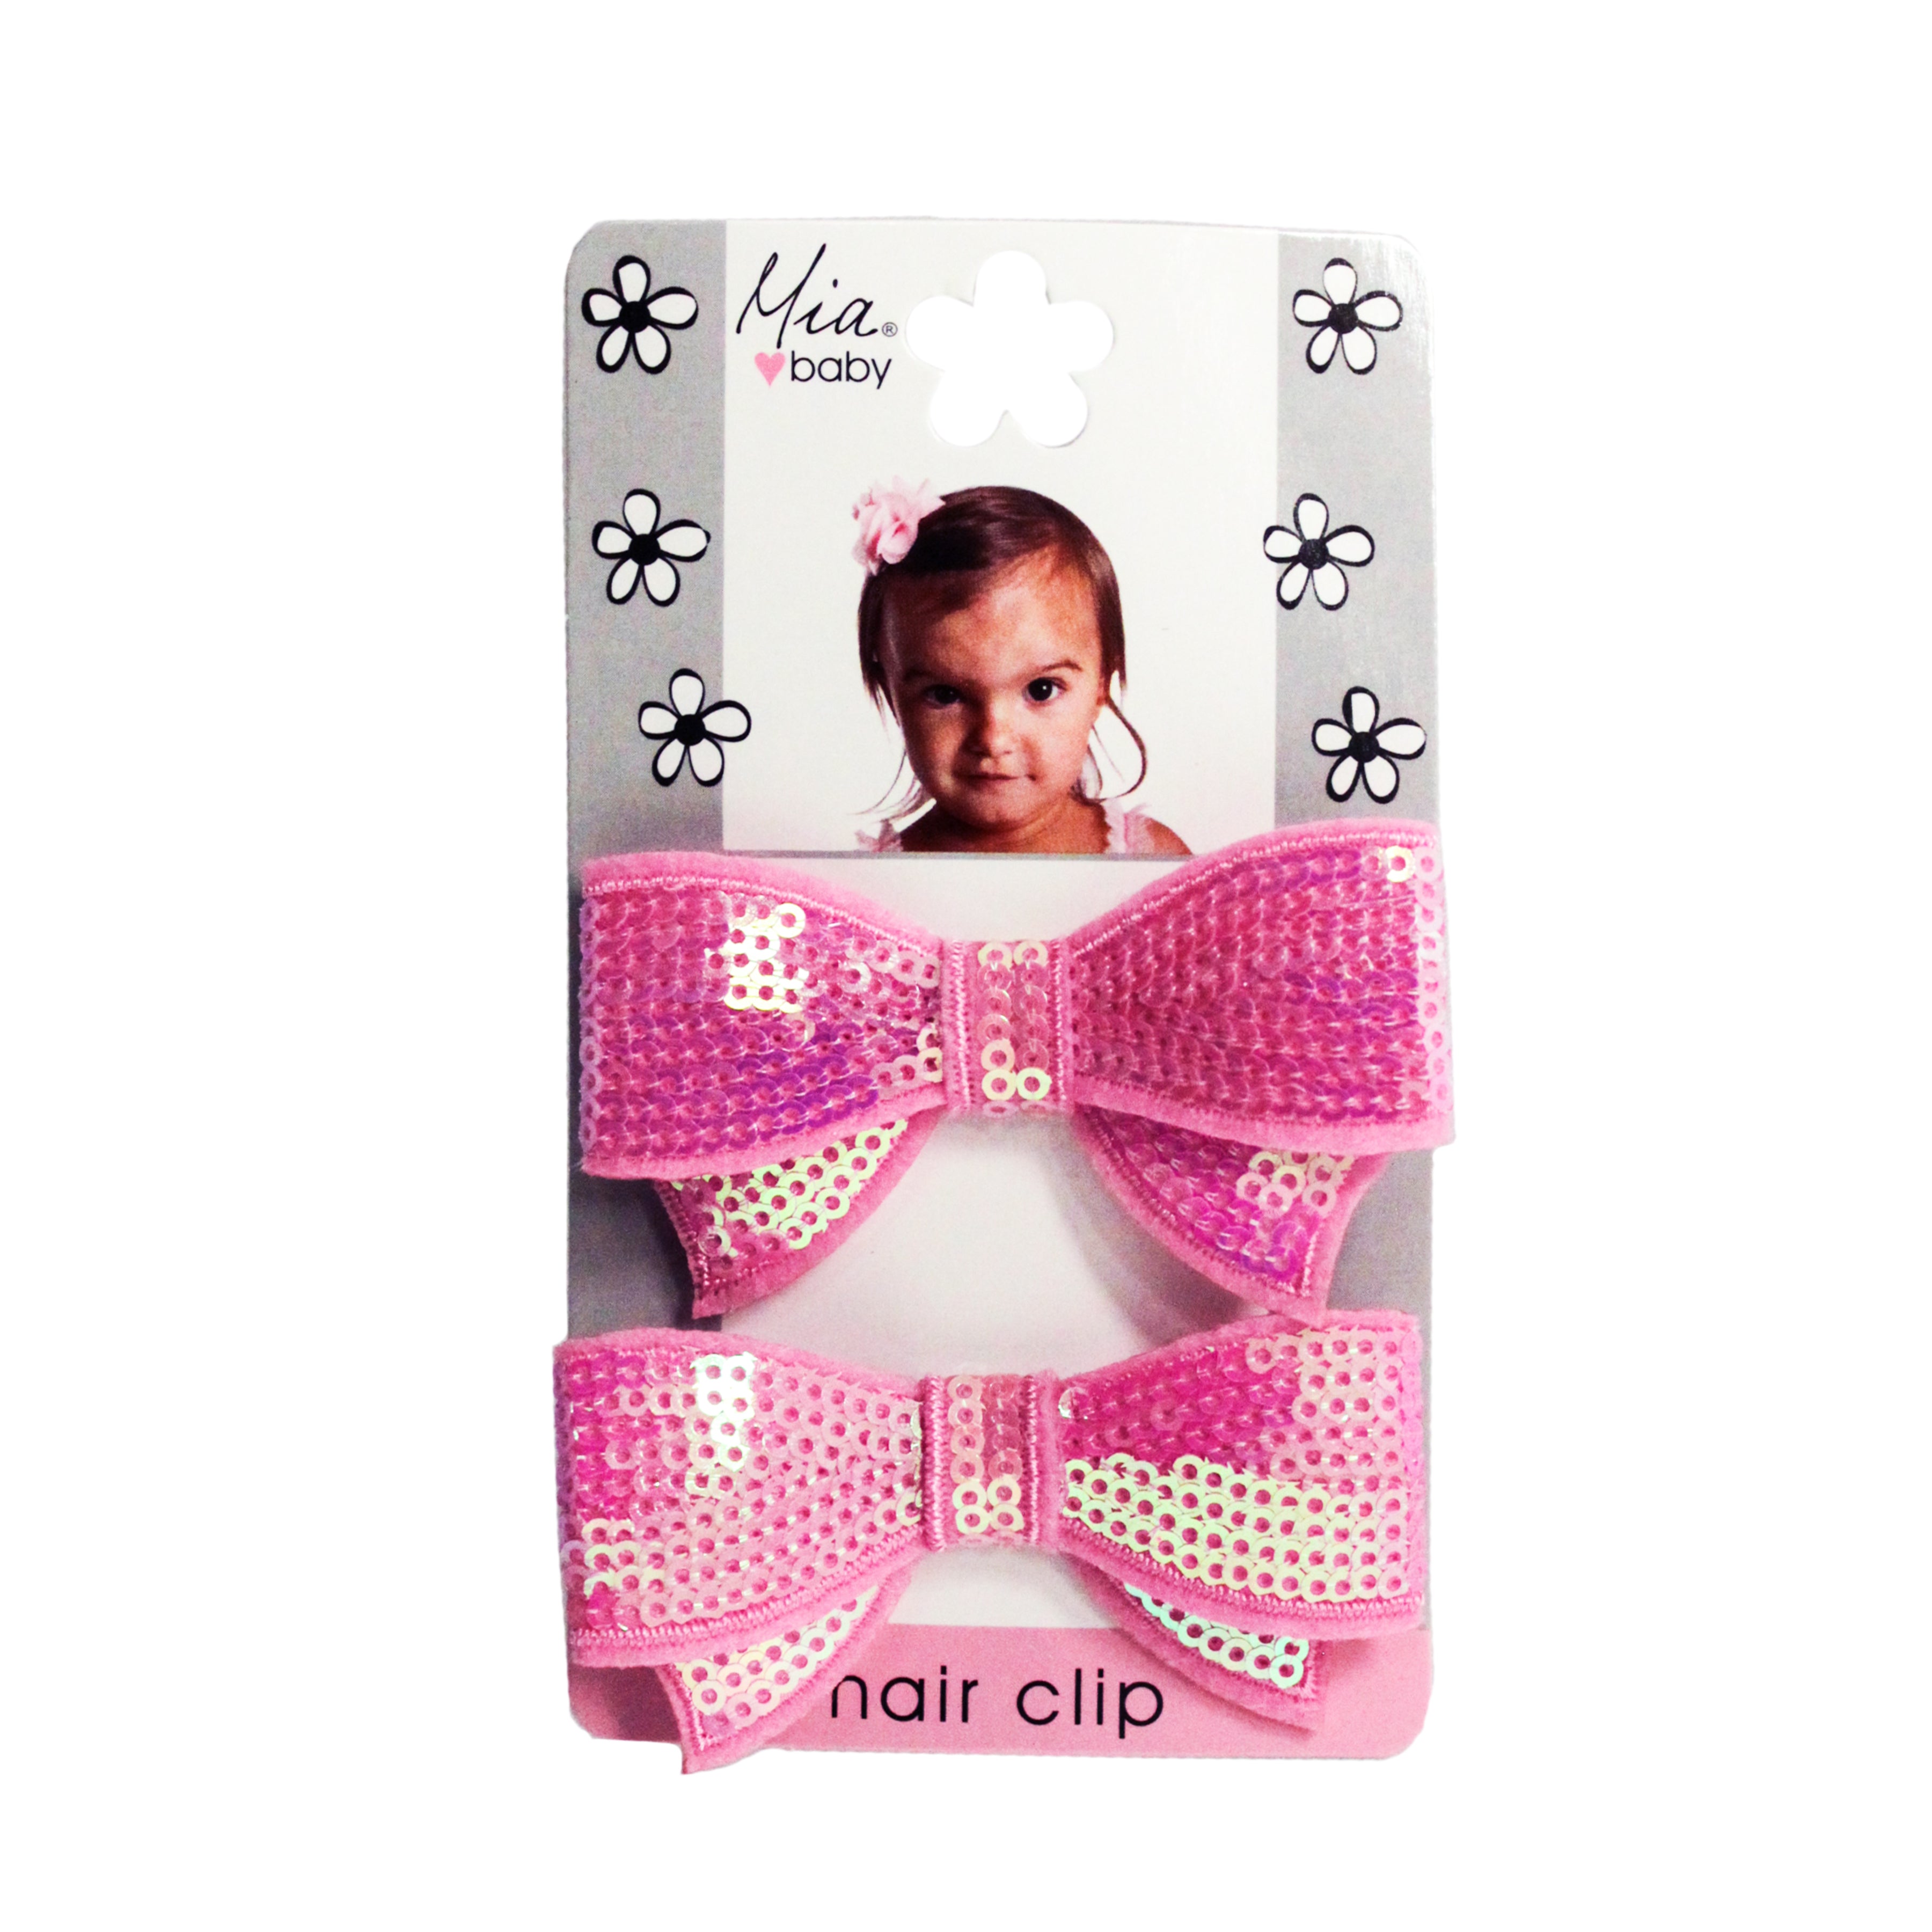 Mia® Baby Sequins Mini Bow Clips - light pink color - designed by #MiaKaminski of Mia Beauty